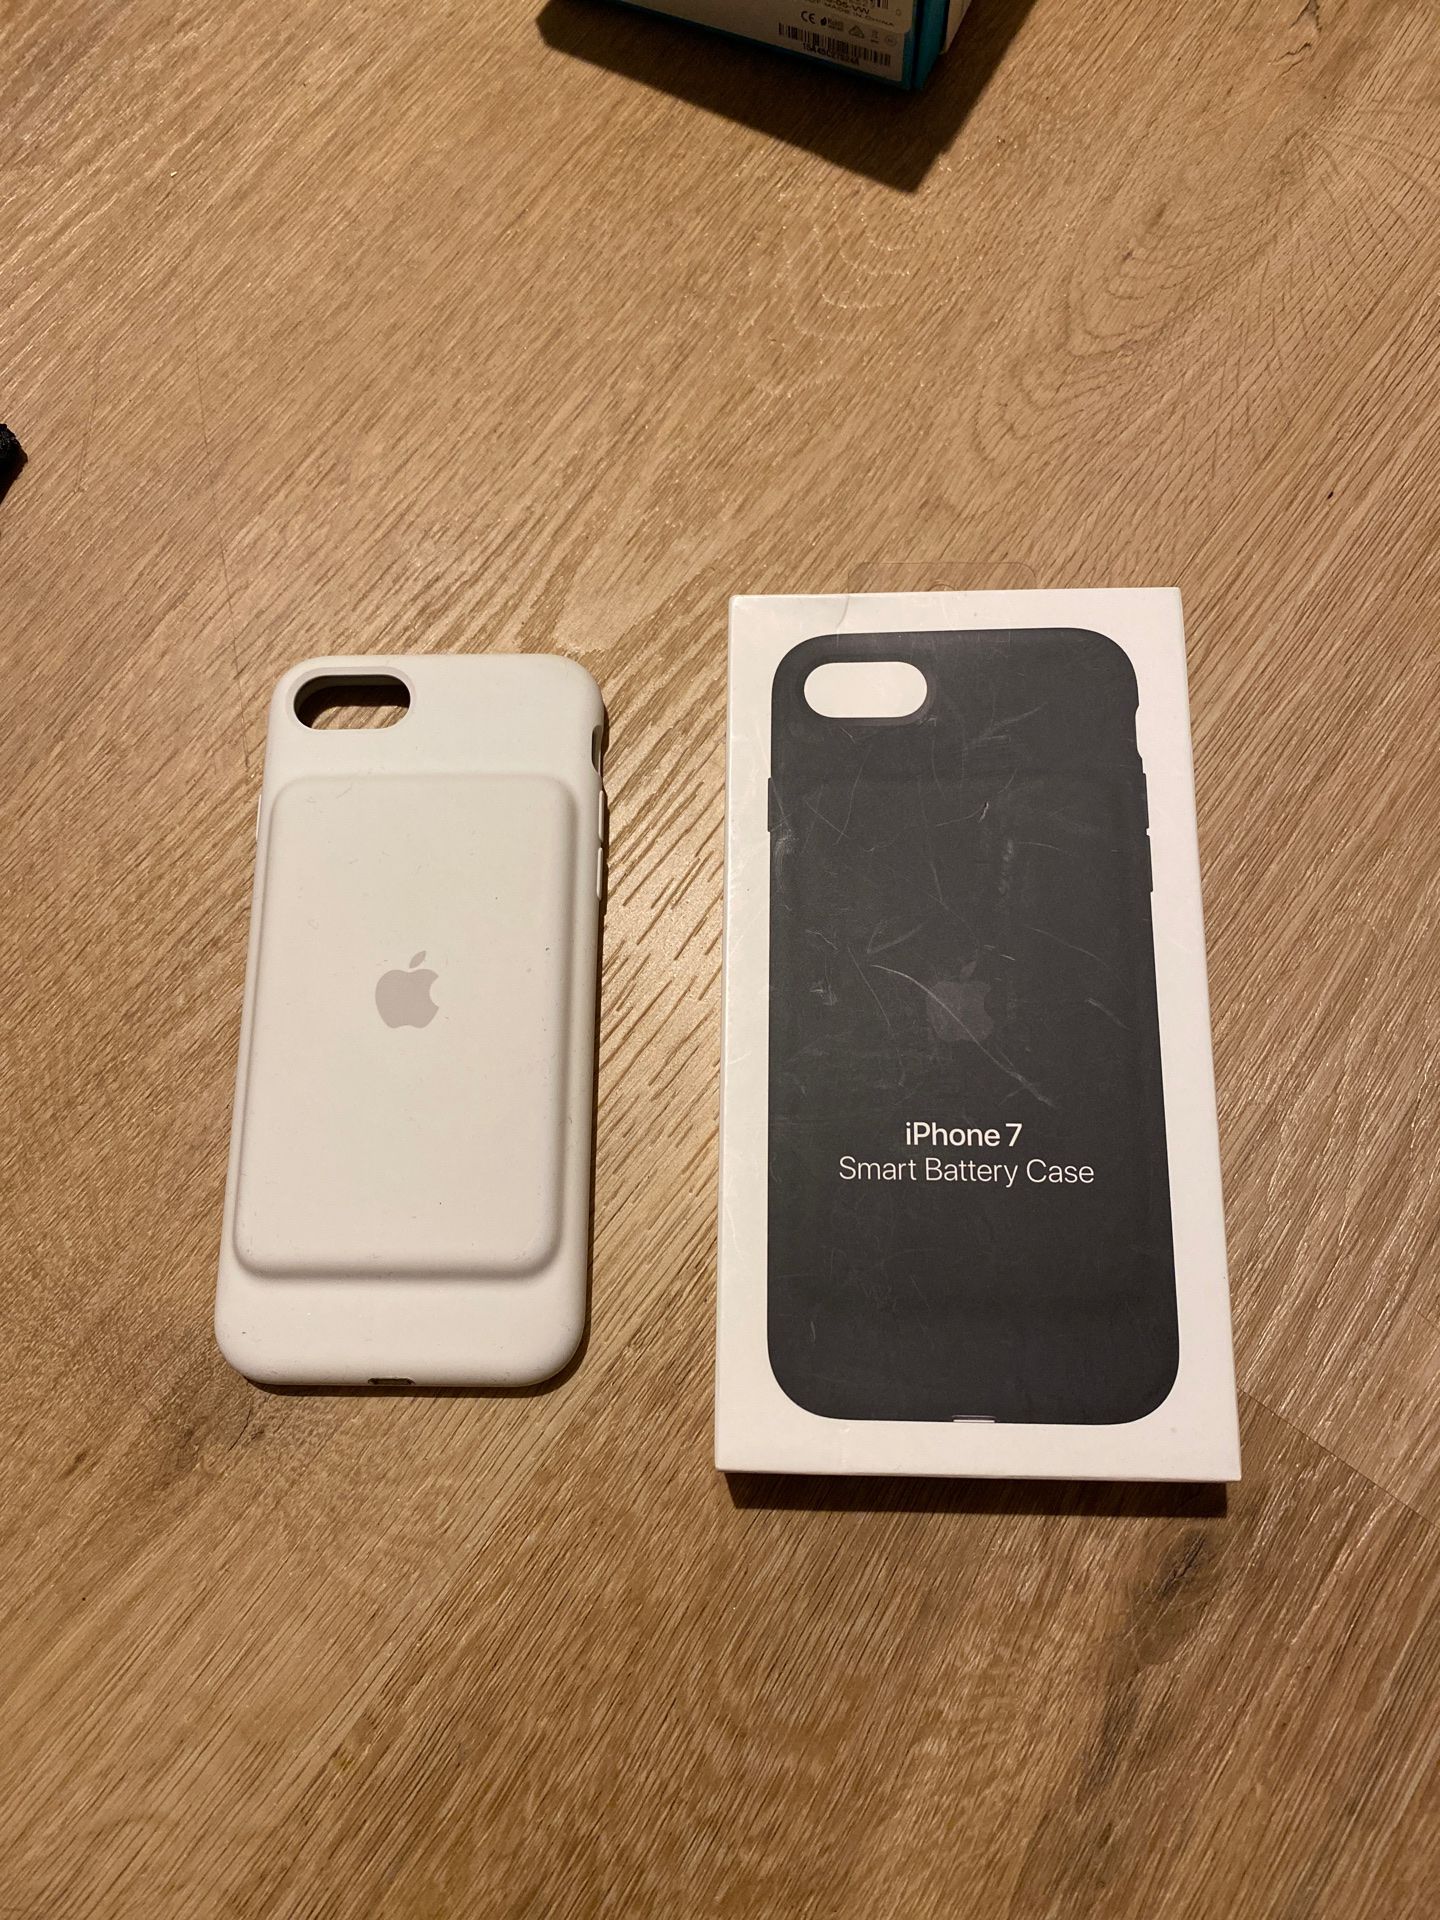 iphone 7 charging phones cases